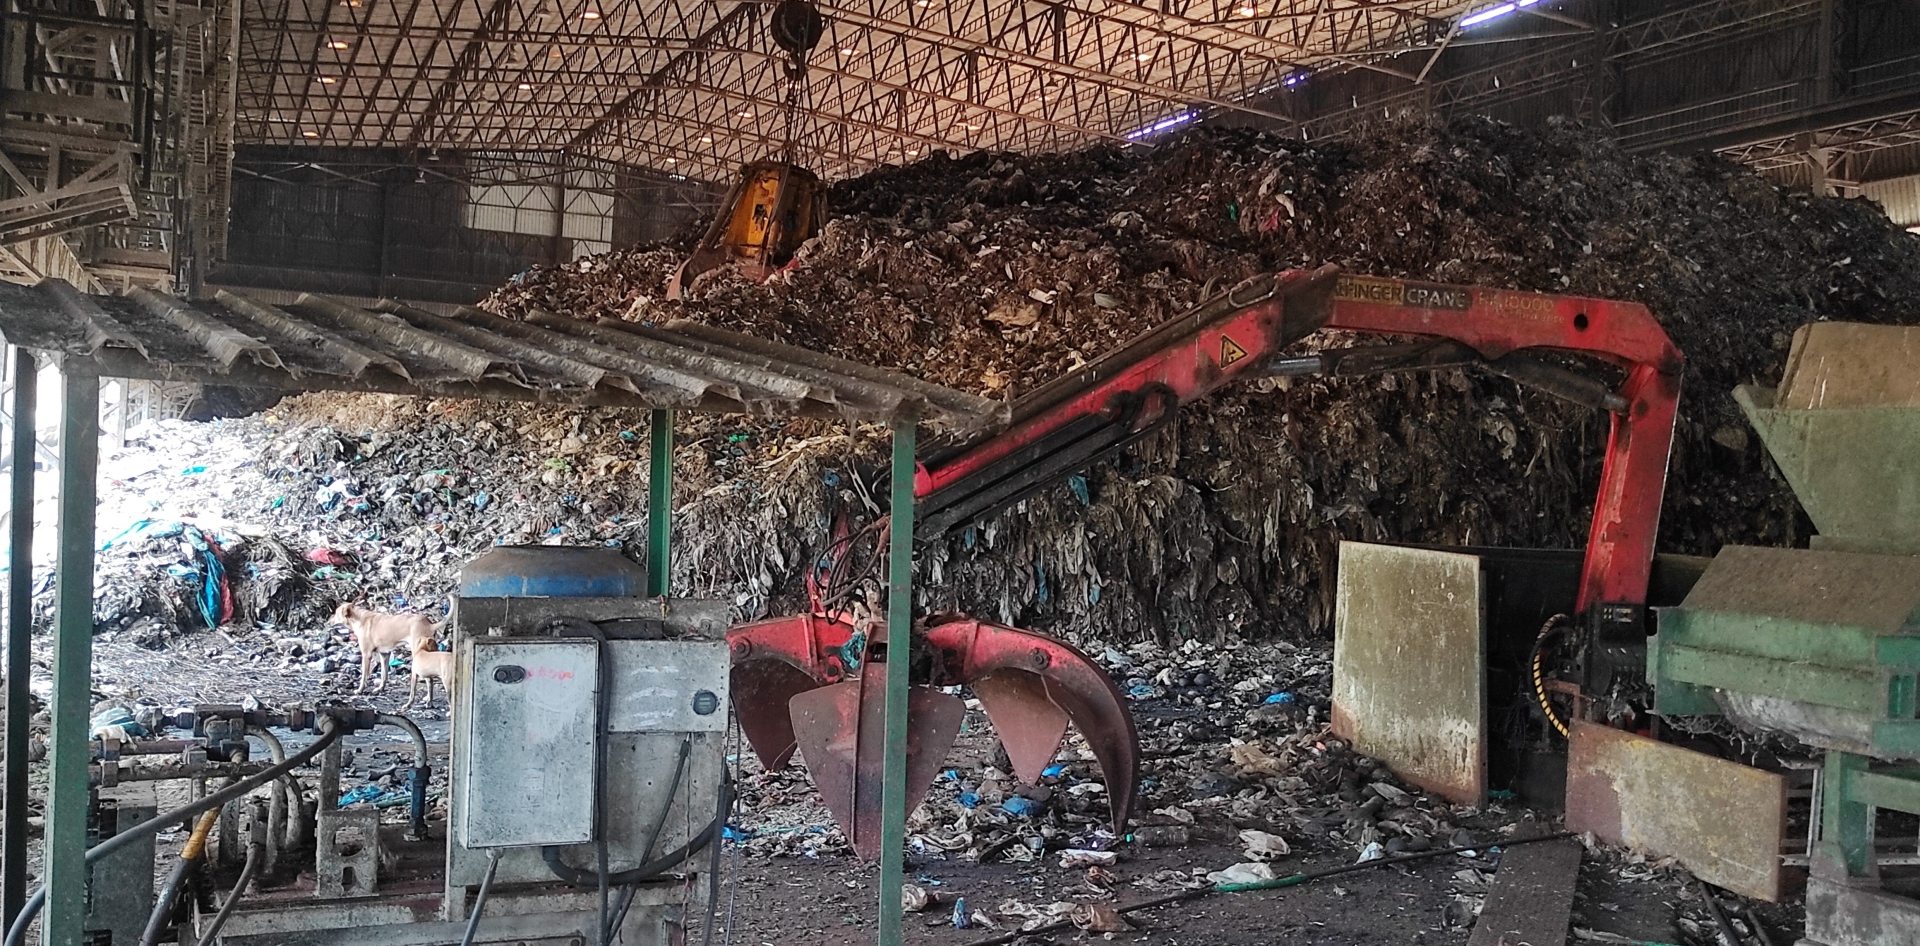 ﻿Margao council's waste management scheme stuck in political gridlock